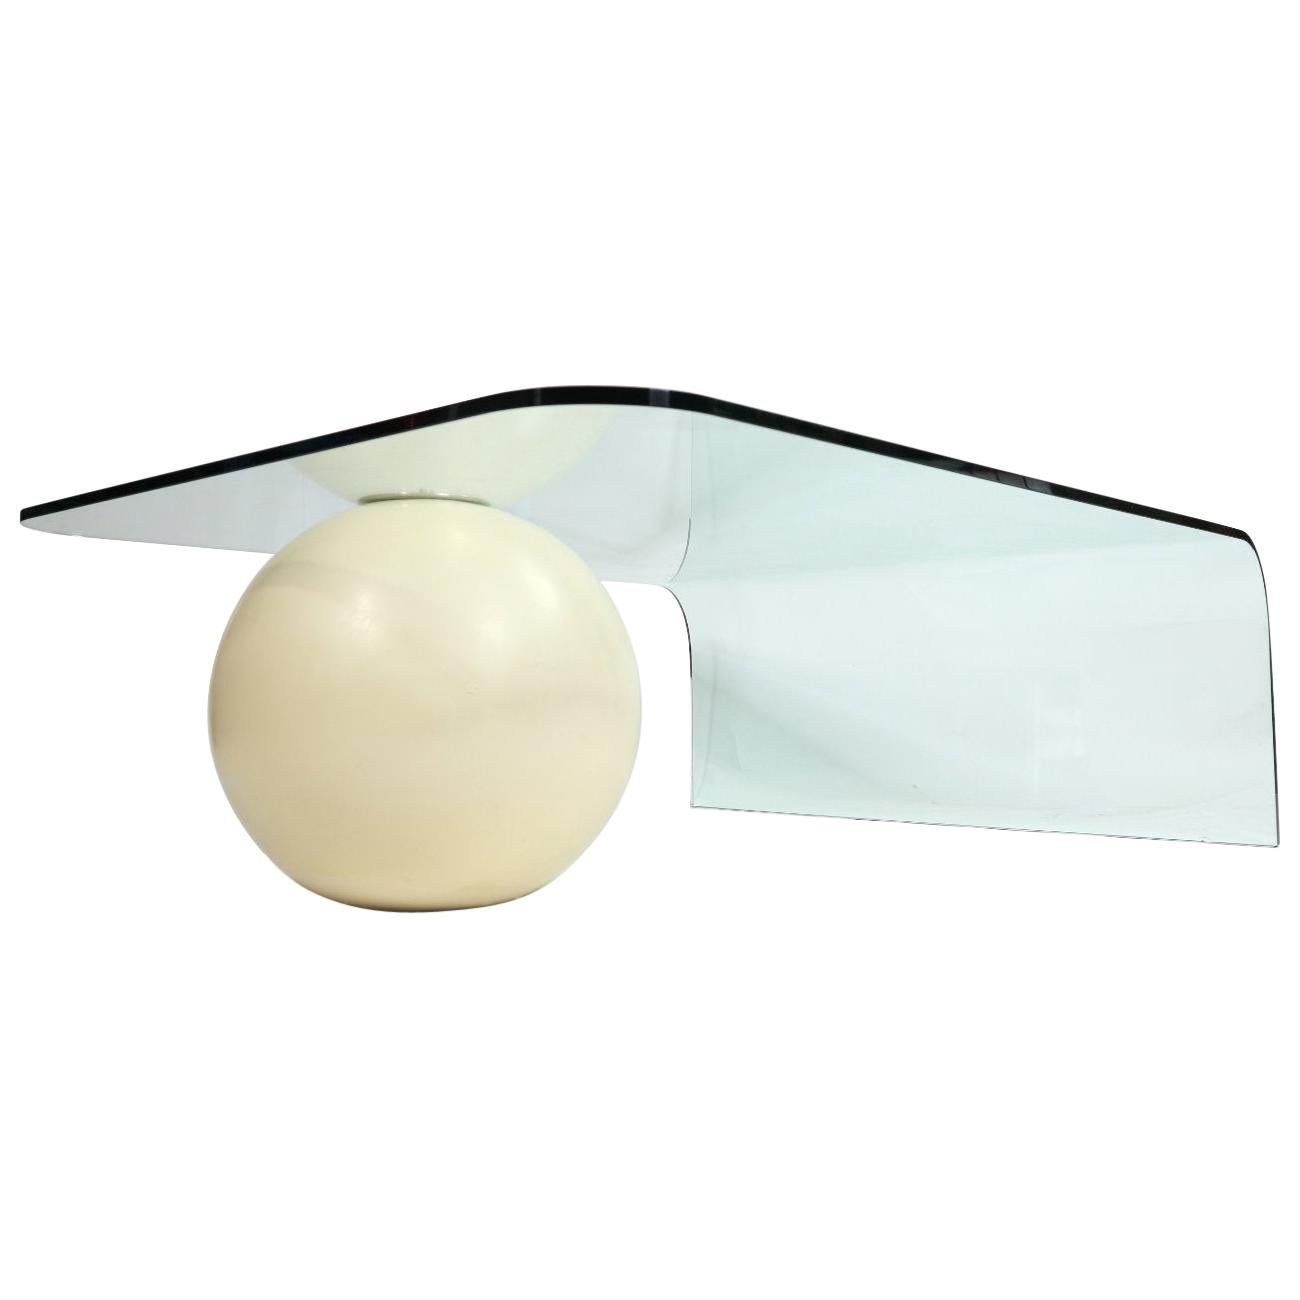 Modern Waterfall Curved Glass Coffee Table Balanced on White Ball